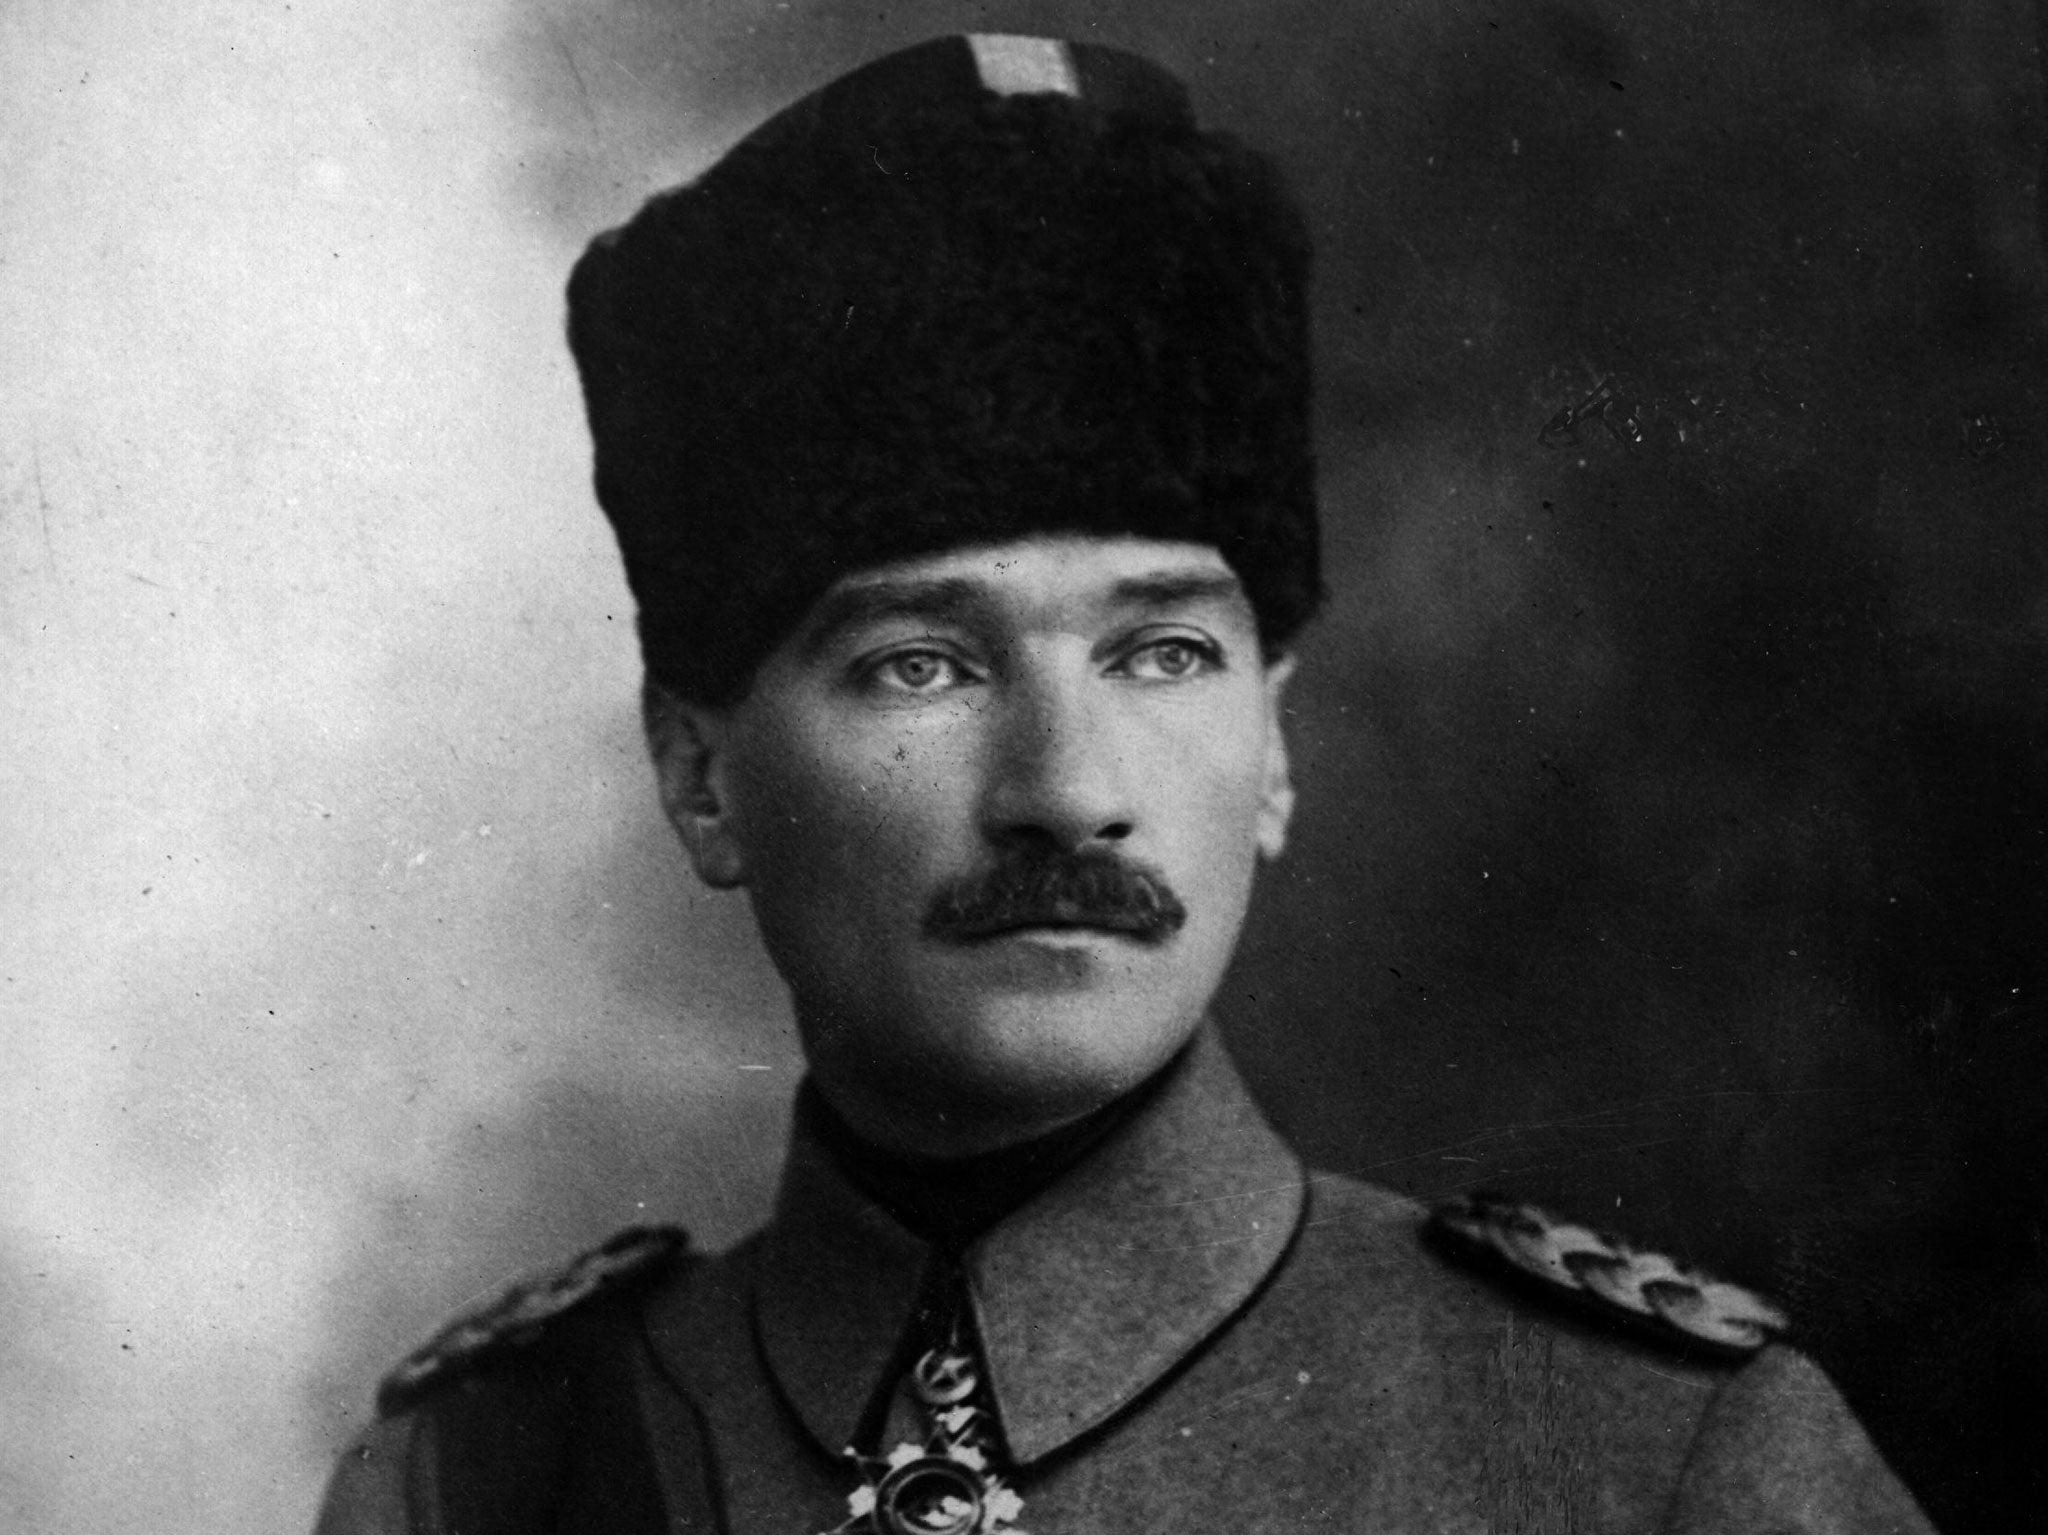 Ataturk, photographed in 1916